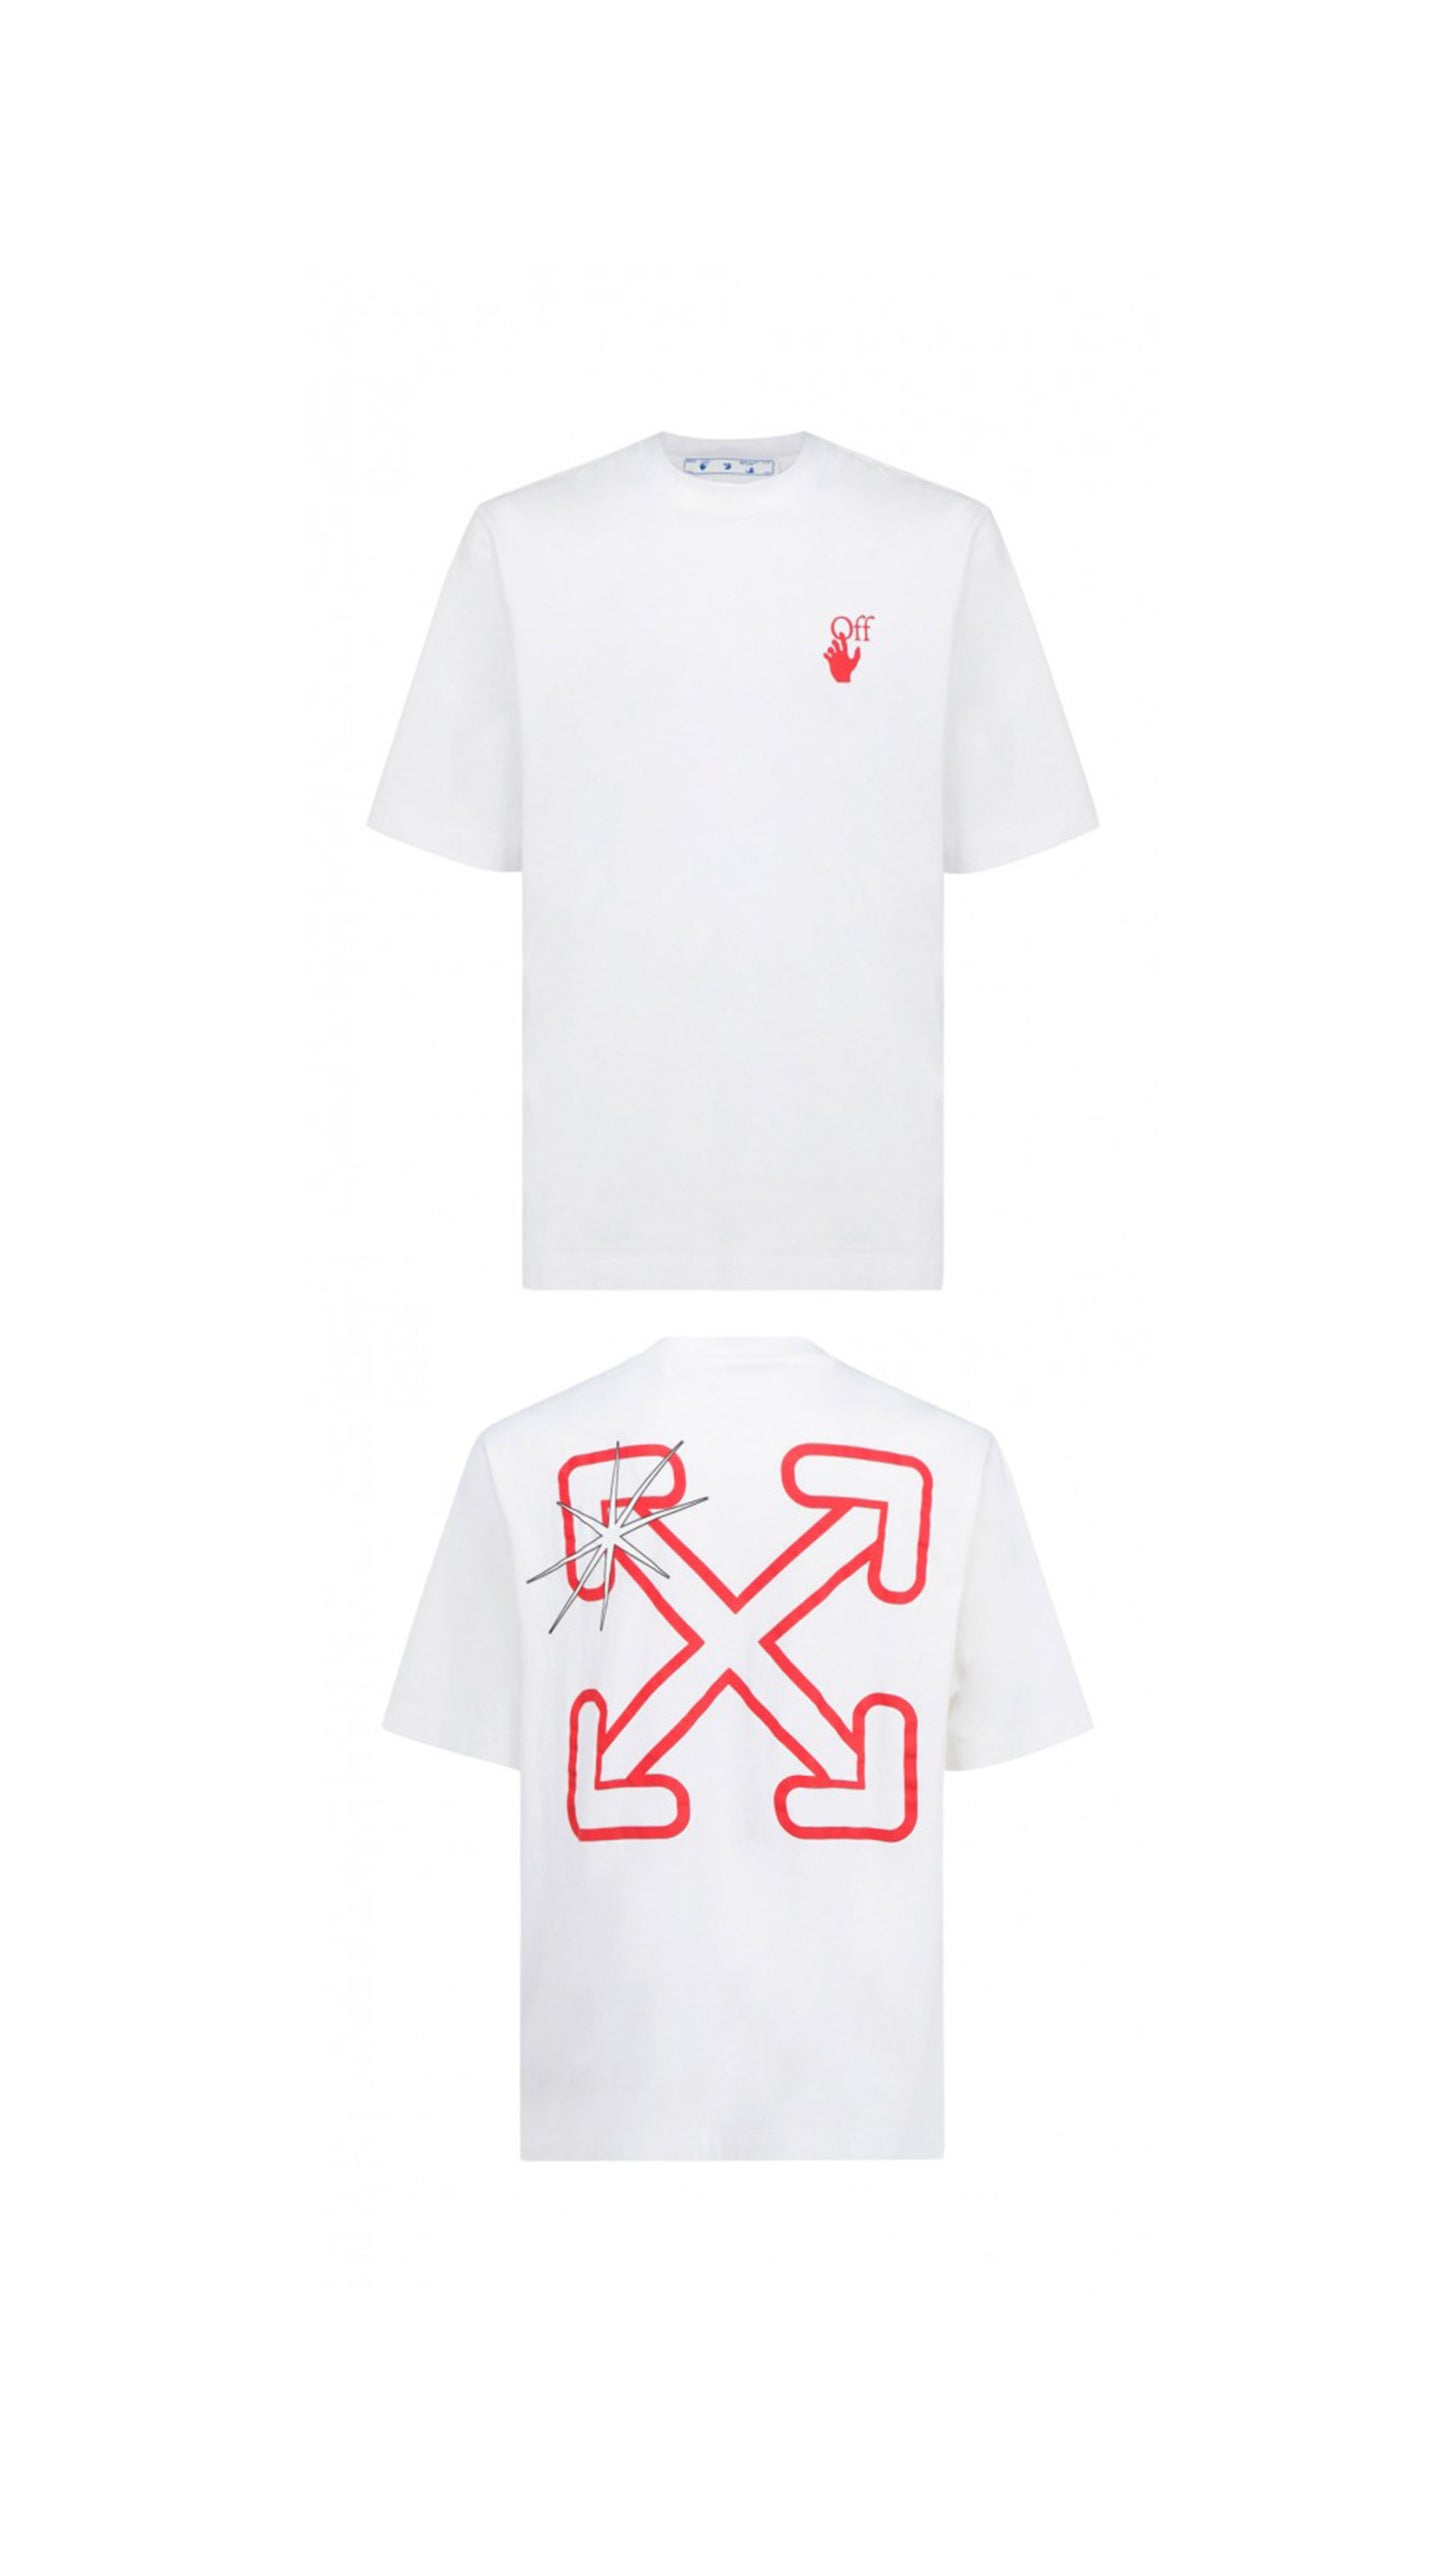 Starred Arrow T-Shirt - White / Multi